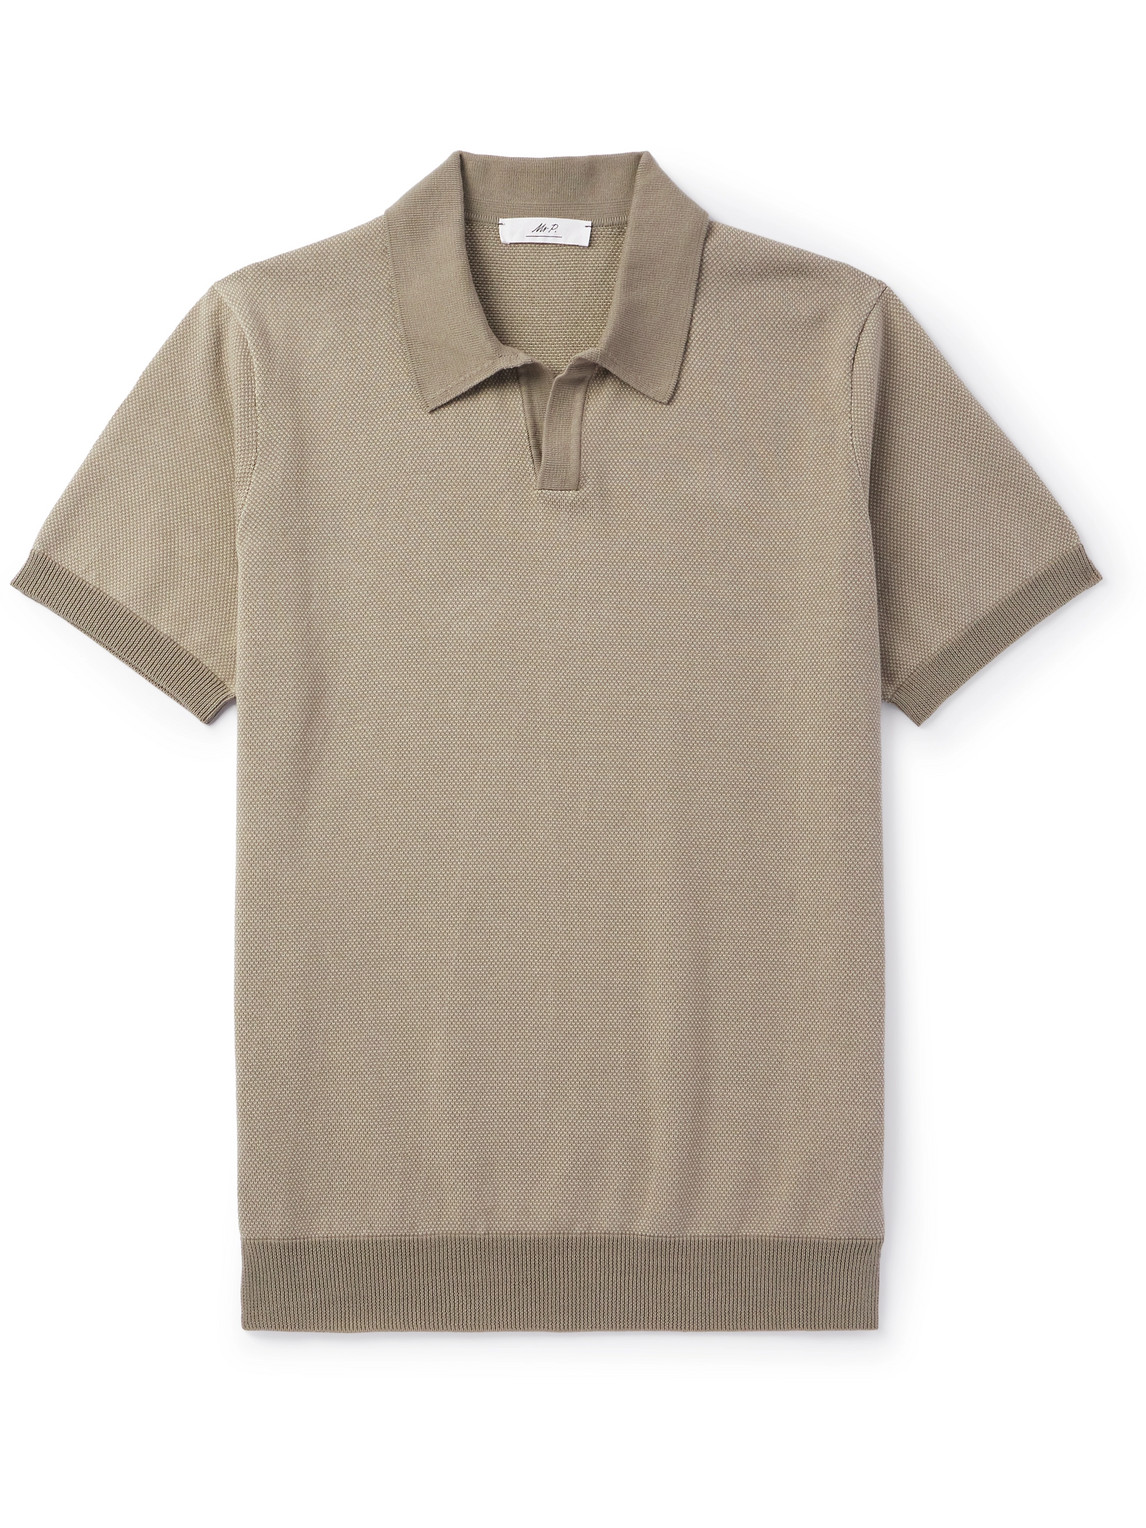 Mr P. - Honeycomb-Knit Cotton Polo Shirt - Men - Neutrals - M von Mr P.